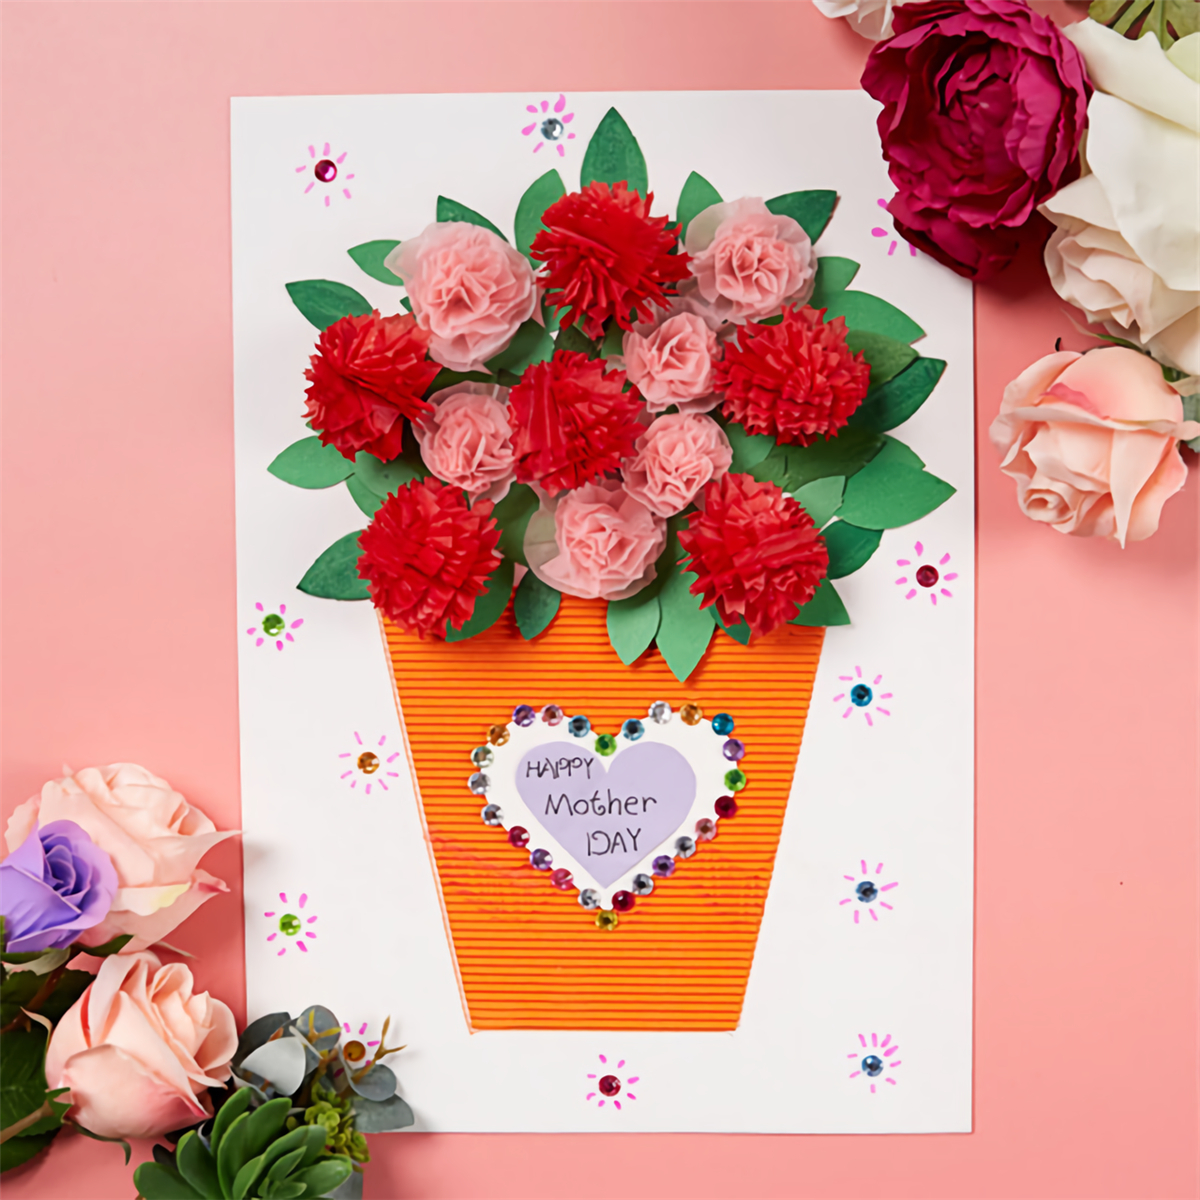 M1642-DIY-Handmade-3D-Mothers-Day-Greeting-Card-Set-Carnation-Flower-Paper-Anniversary-Birthday-Than-1668377-3